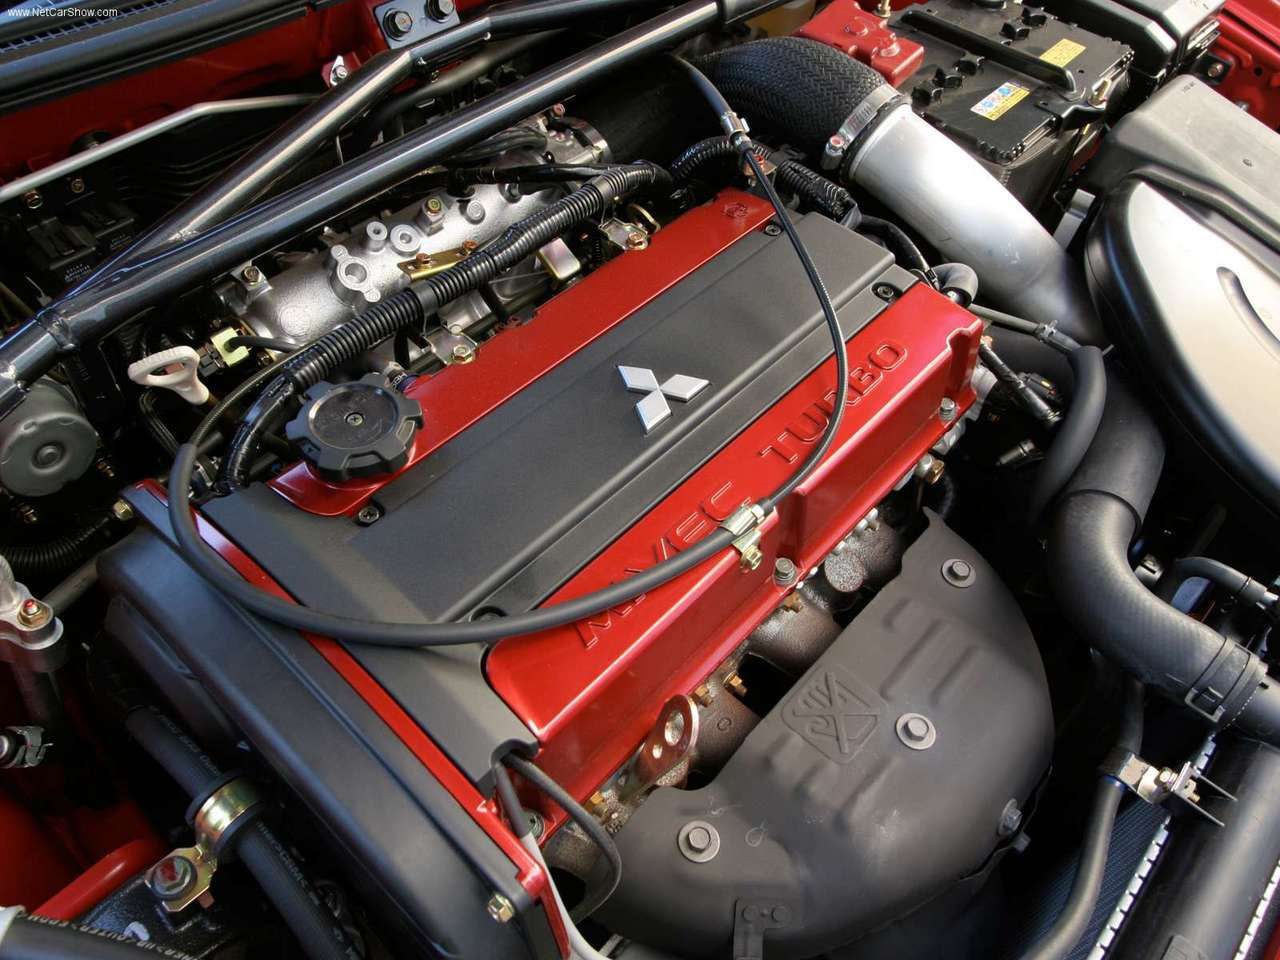 2006 Mitsubishi Lancer Evo IX, engine from above